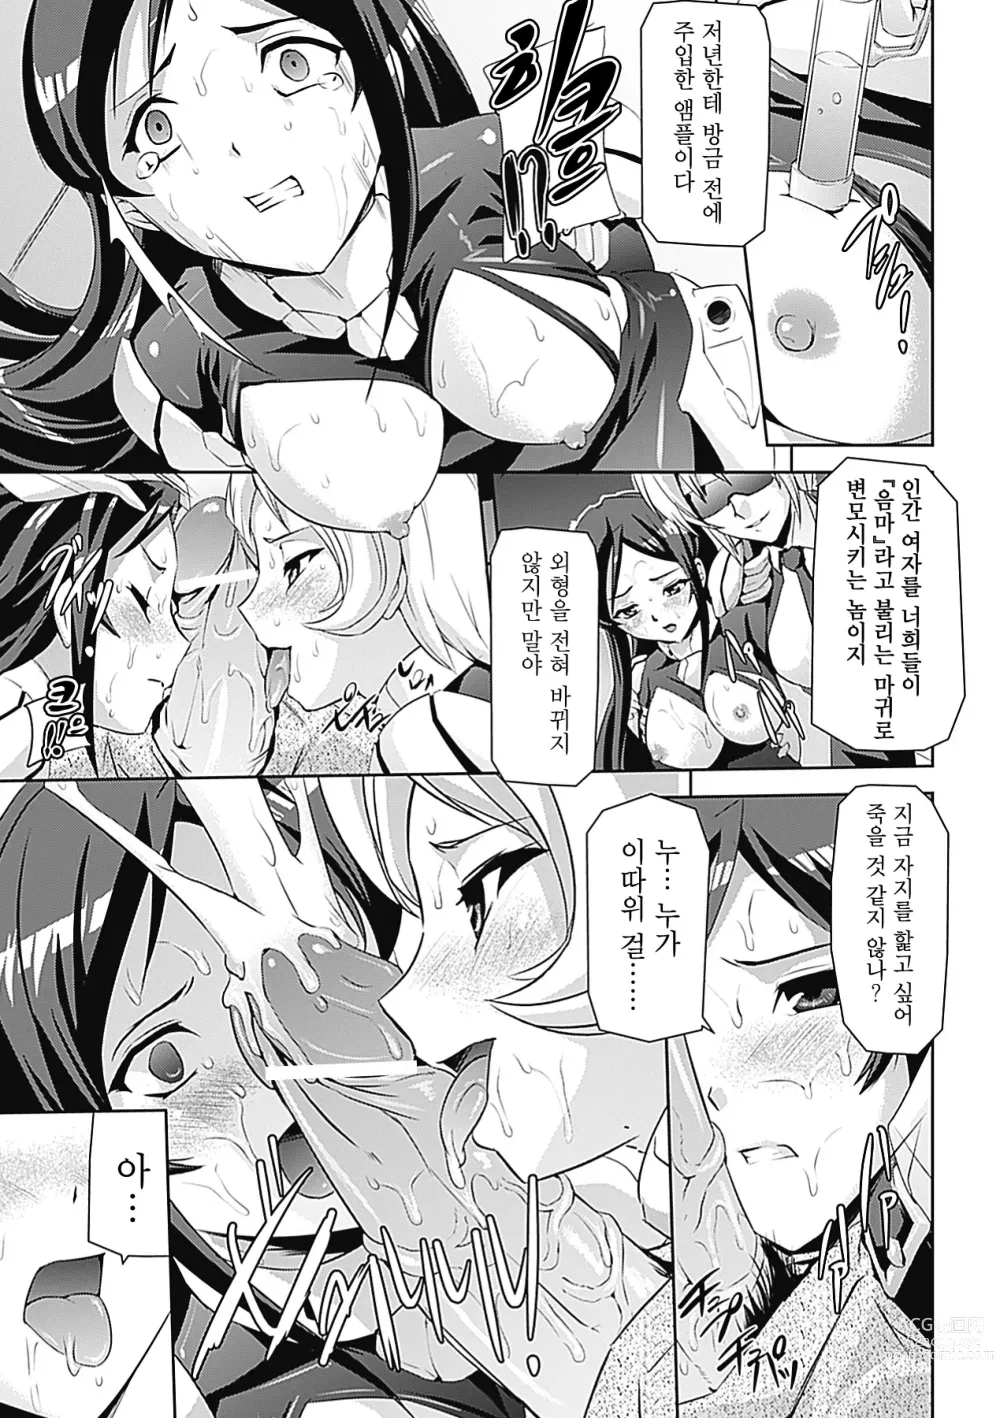 Page 5 of manga Inma no Nie